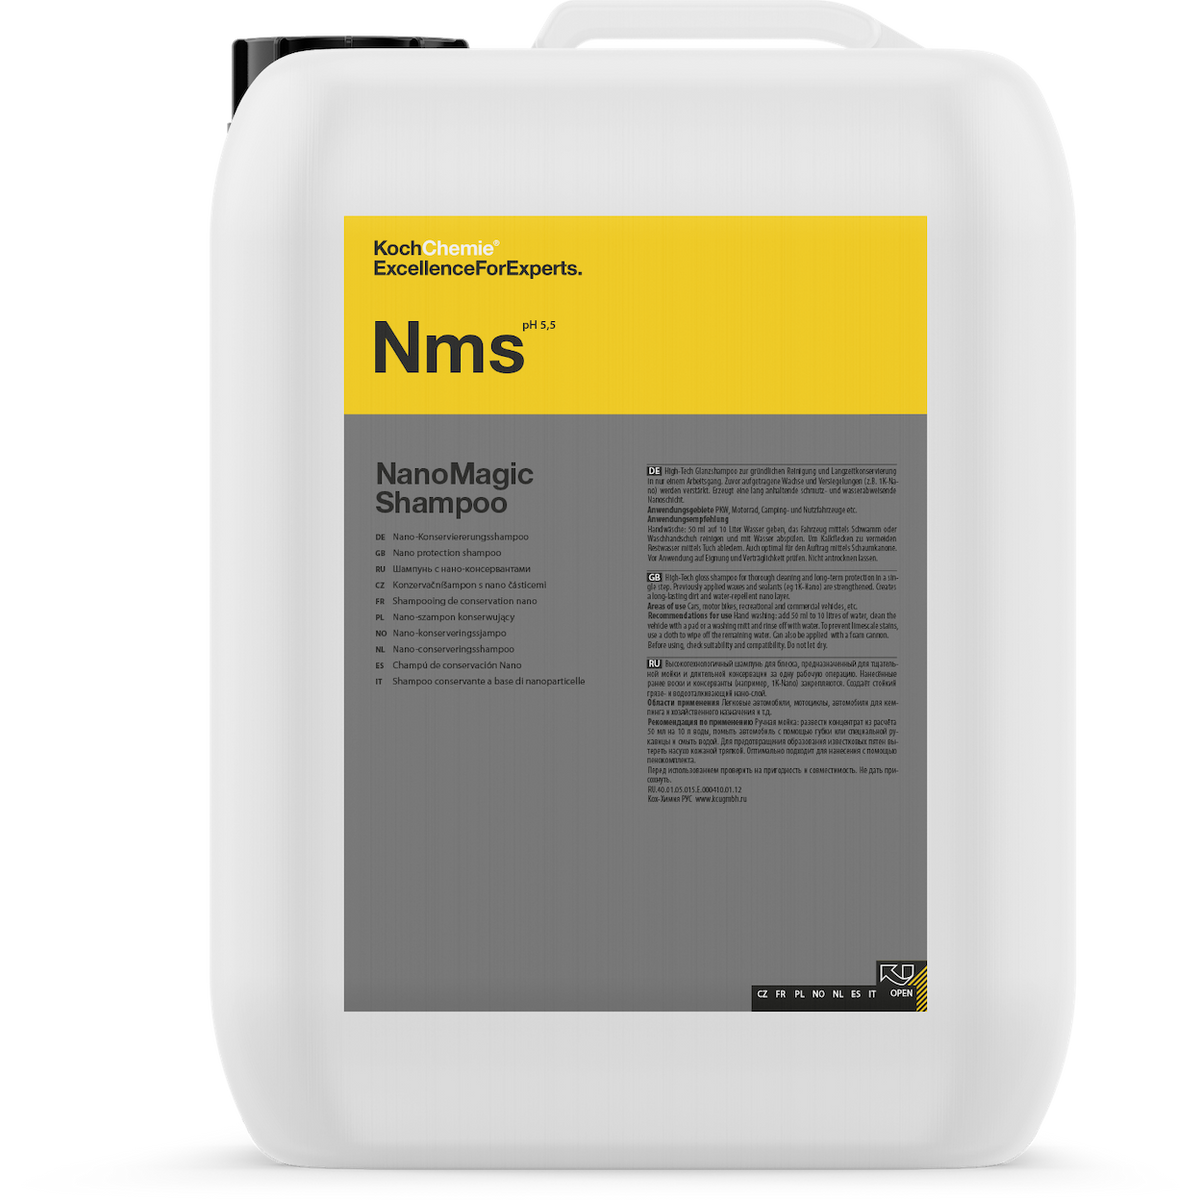 Nms - Nano Magic Shampoo